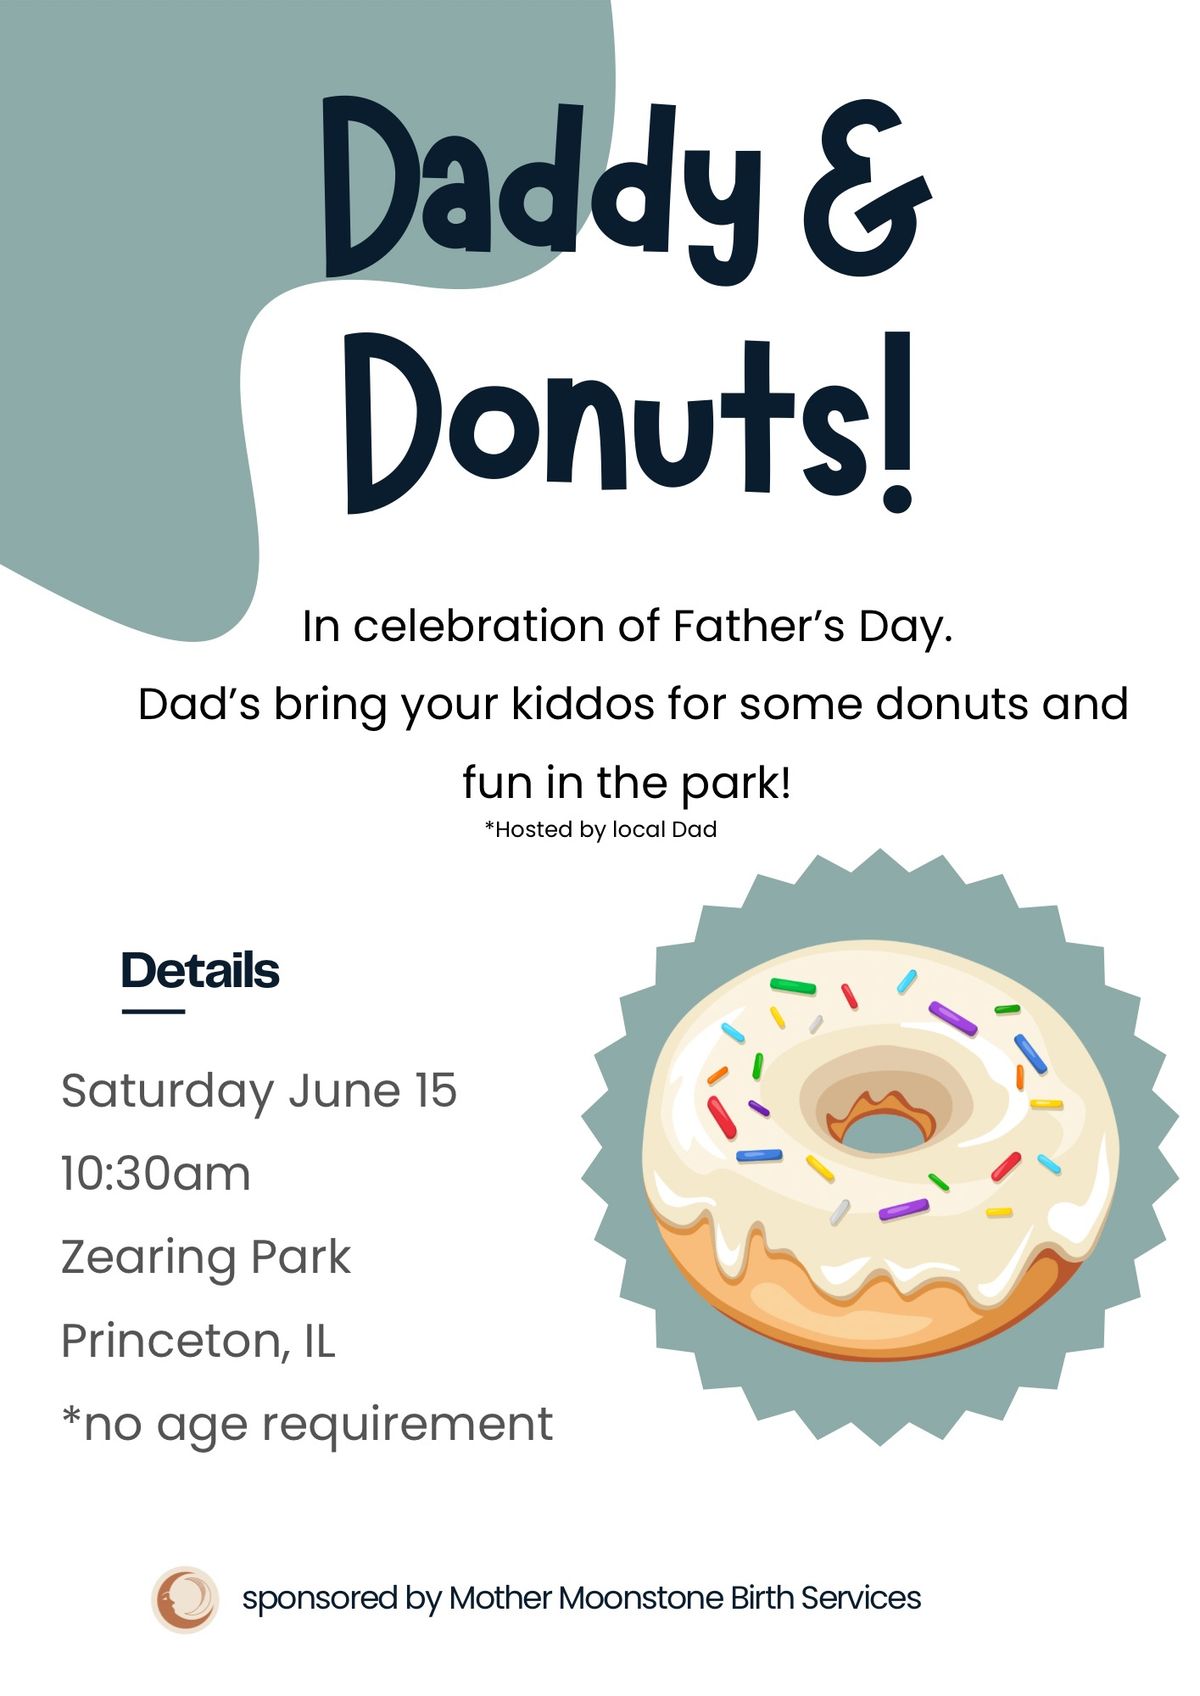 Daddy & Donuts